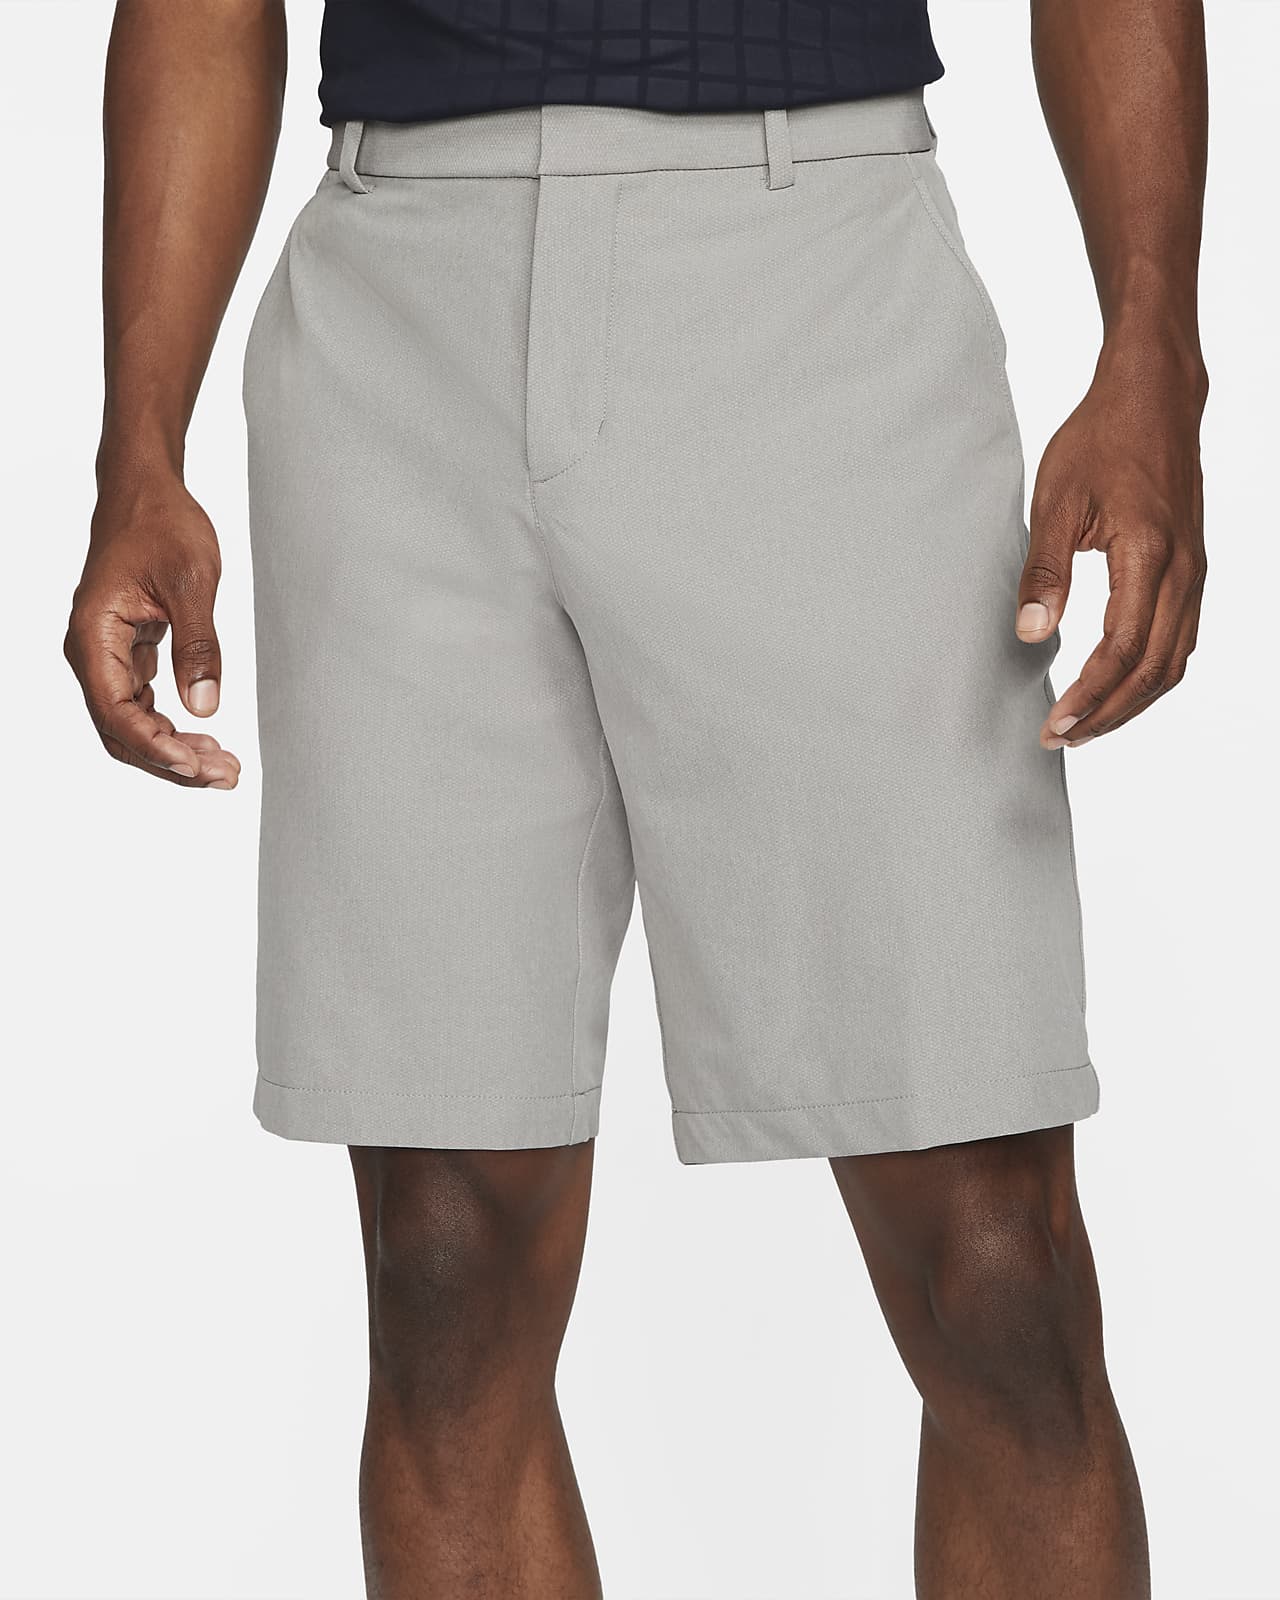 dri fit golf shorts mens